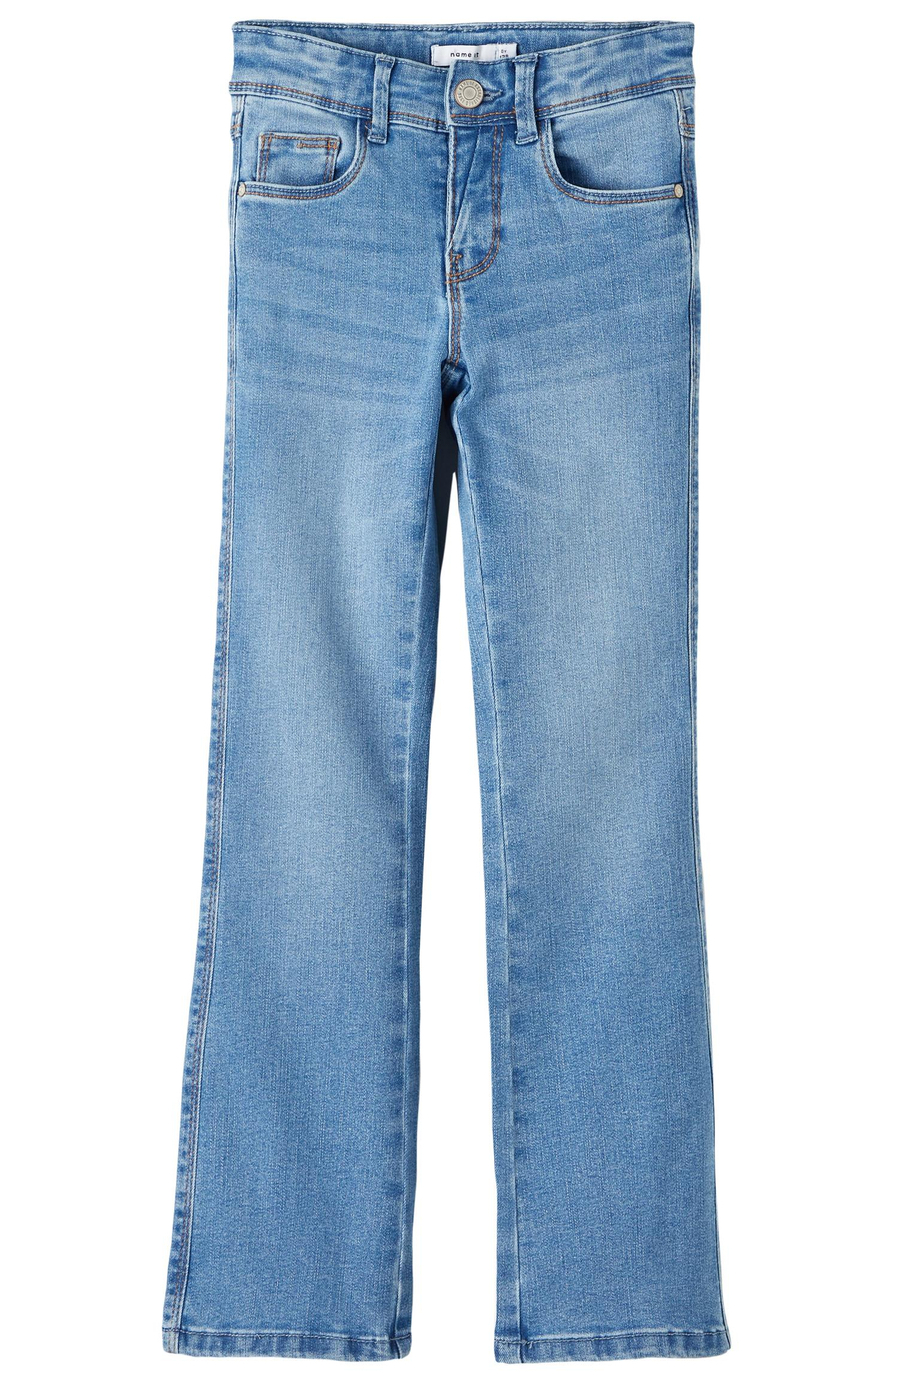 nkfpolly skinny boot jeans 1142-au blue denim jeans 13208876 name medium it